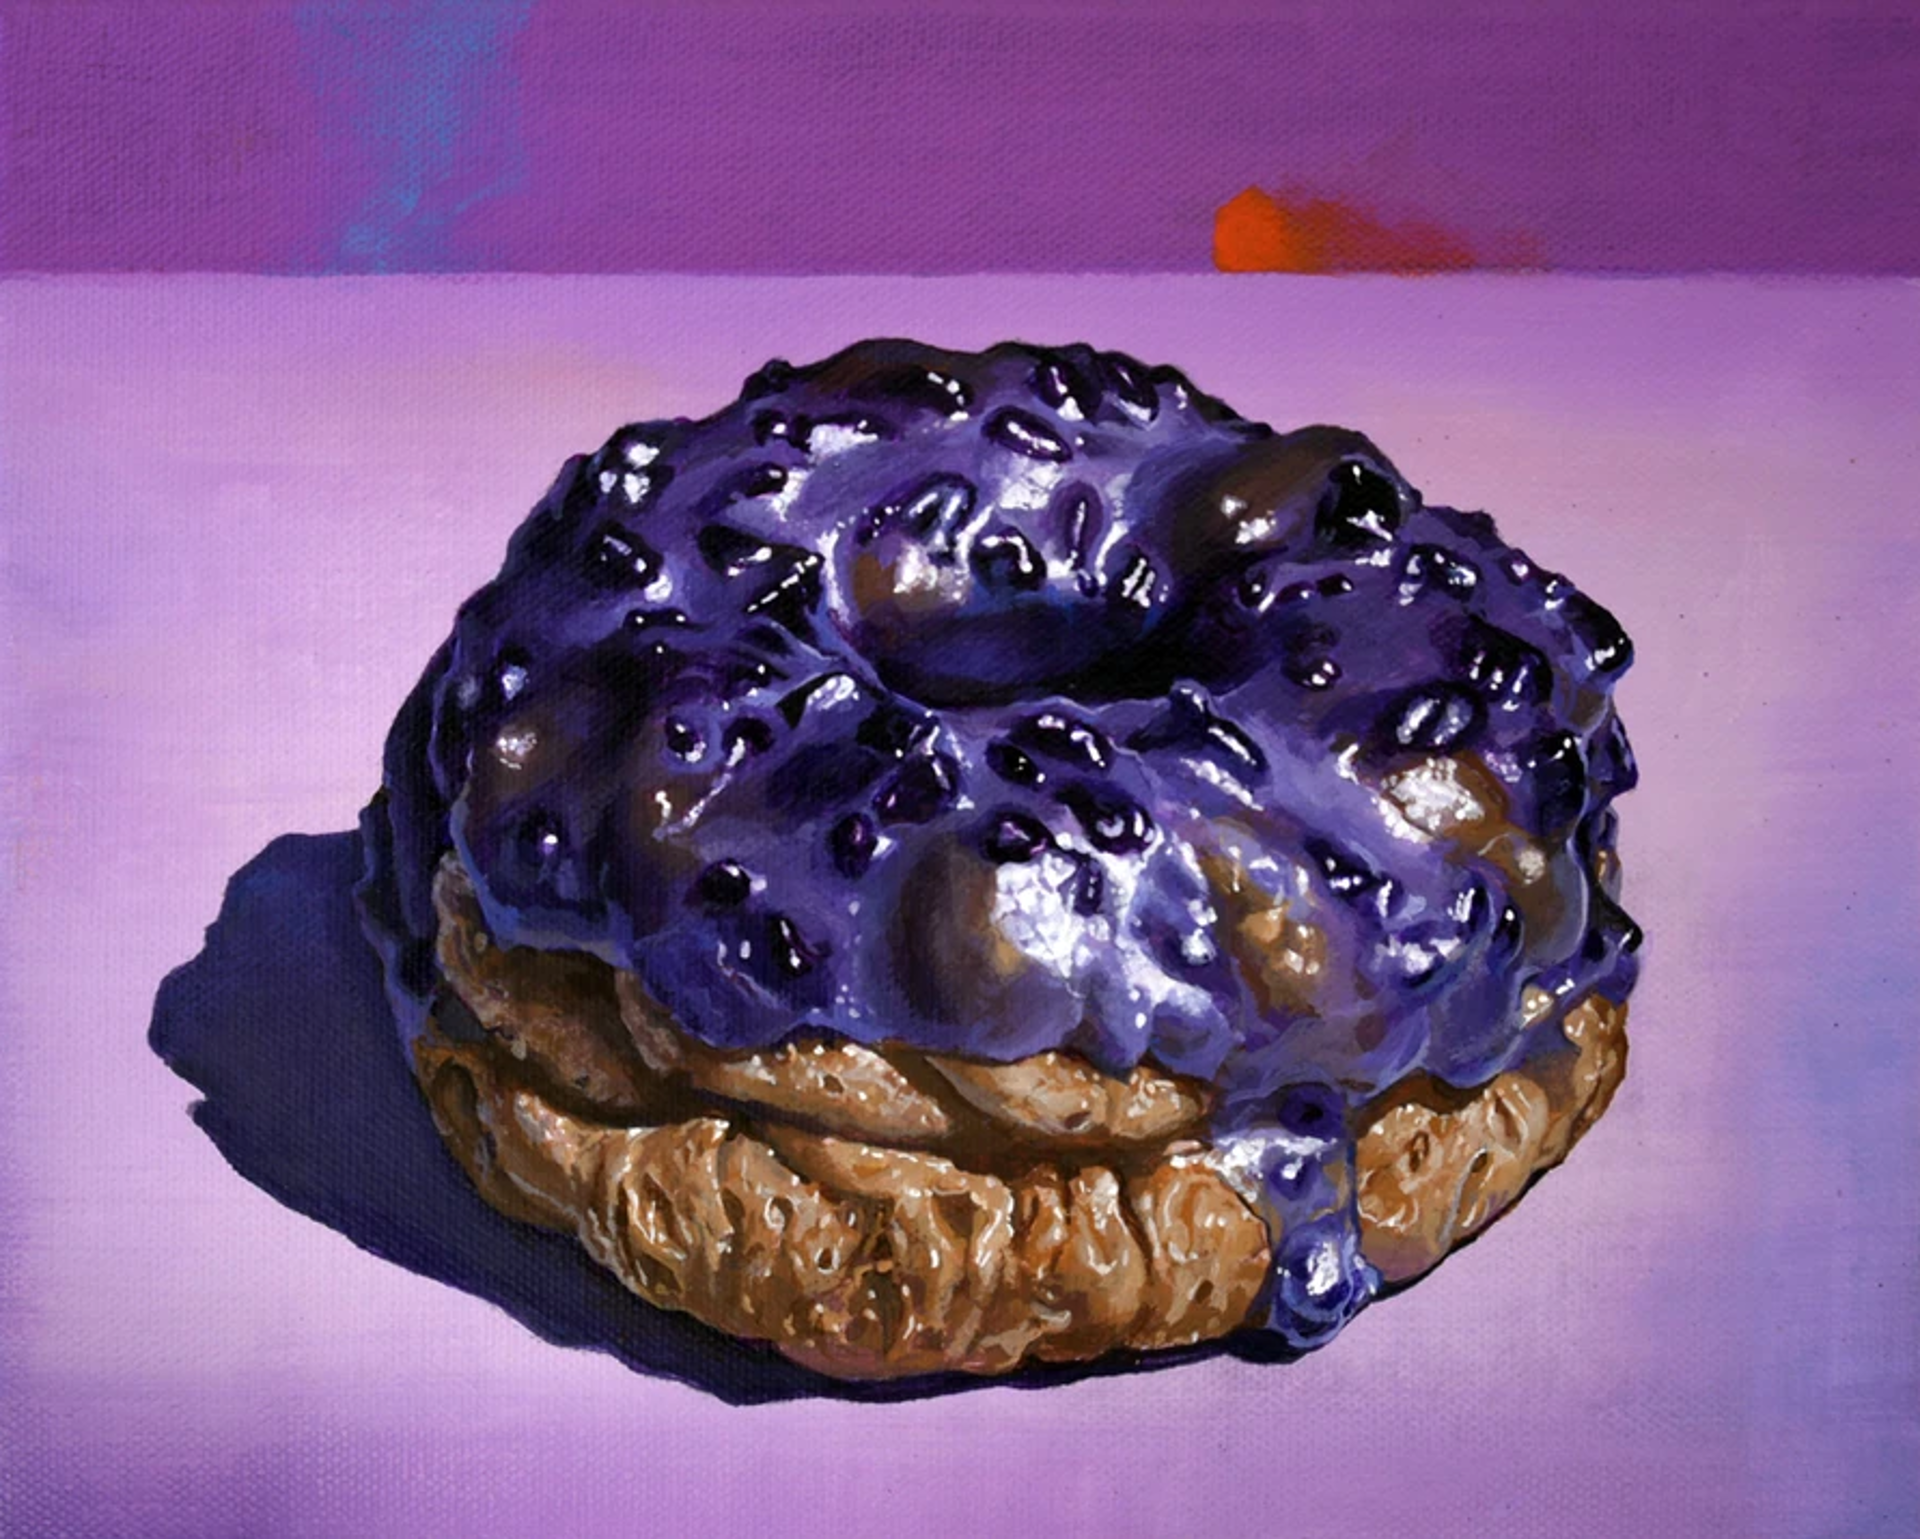 Light of Life - Blueberry Doughnut by Paul Art Lee